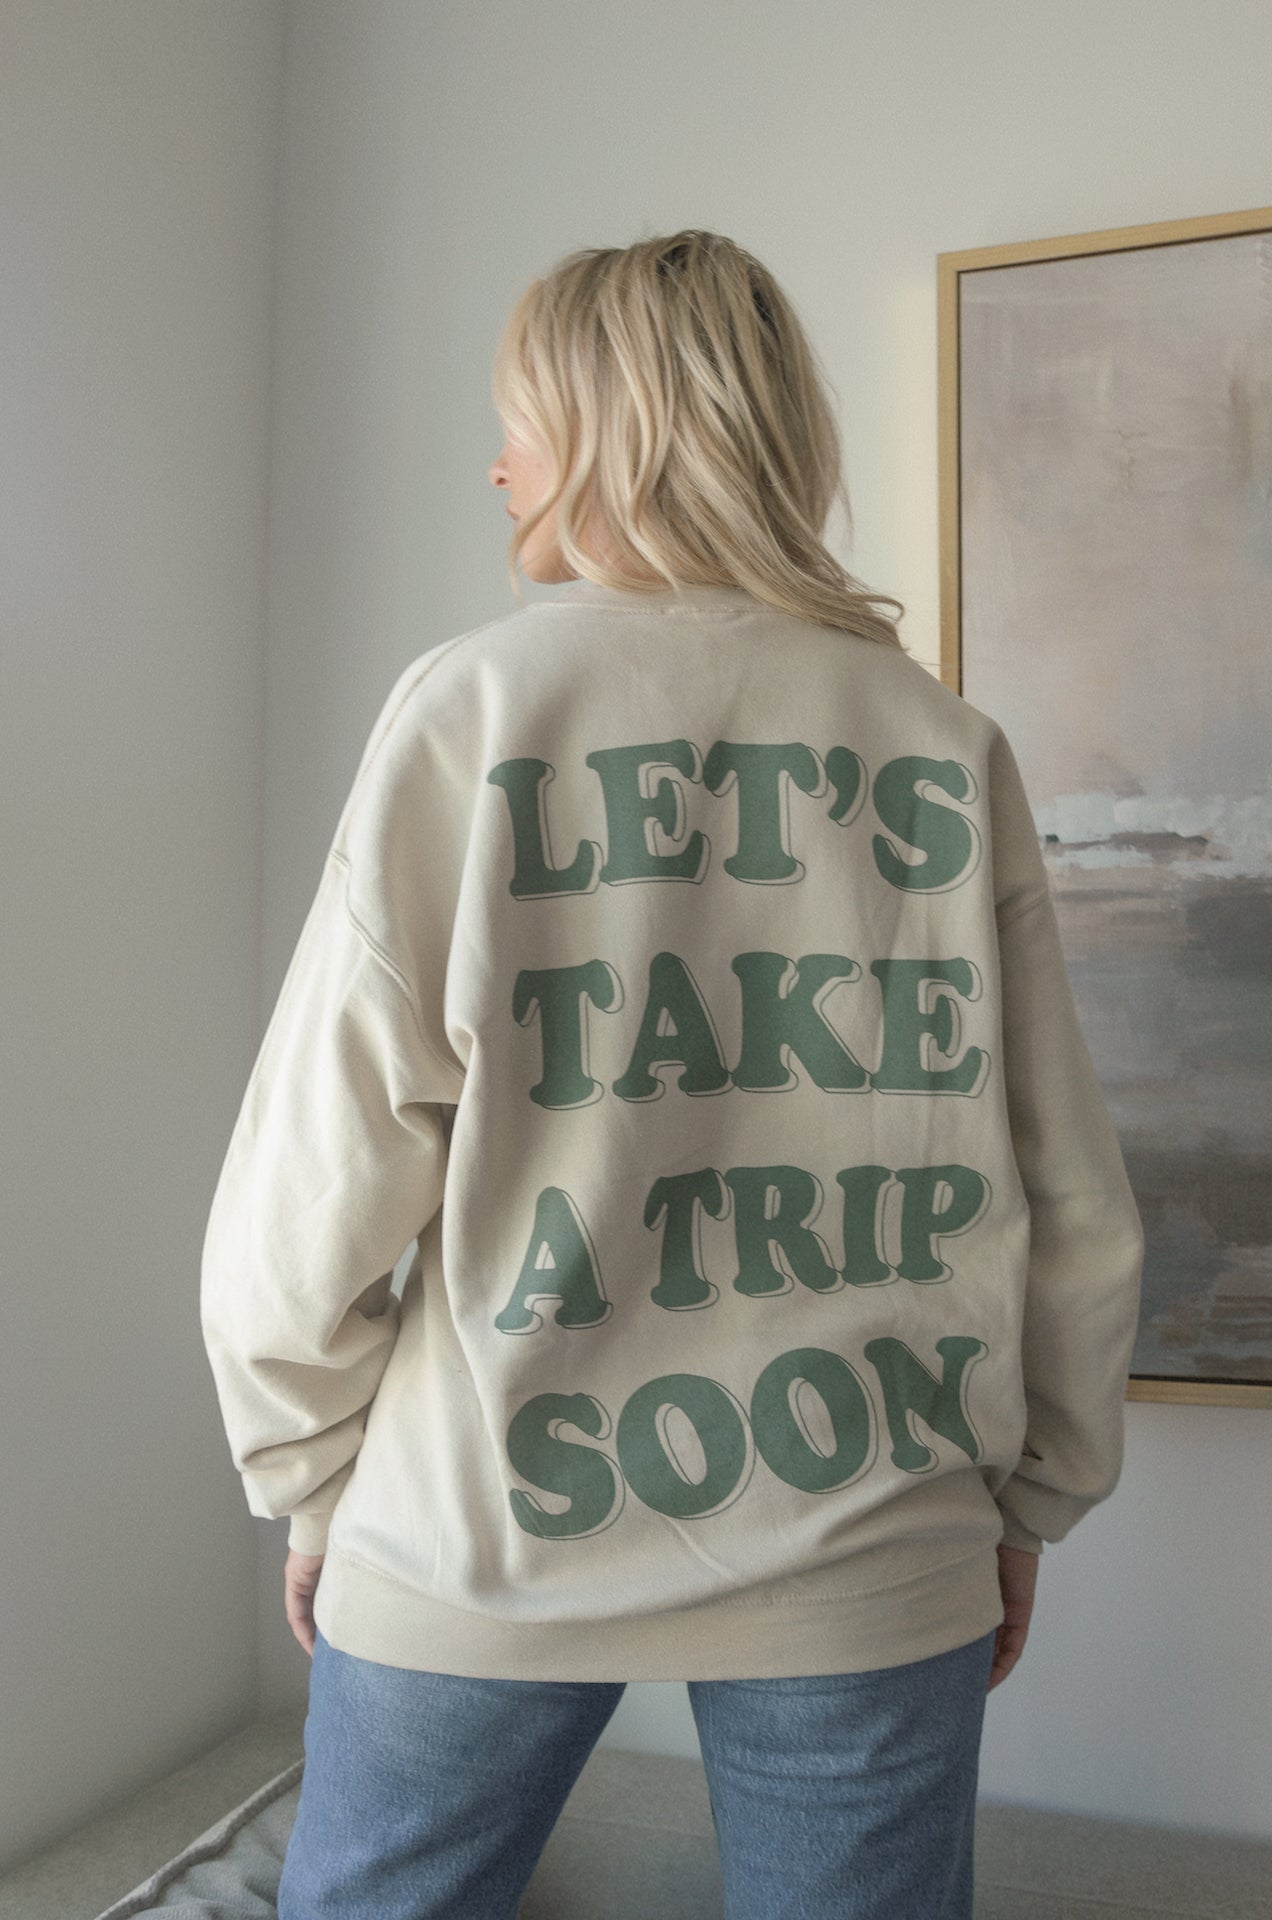 Lets take a trip soon sweatshirt